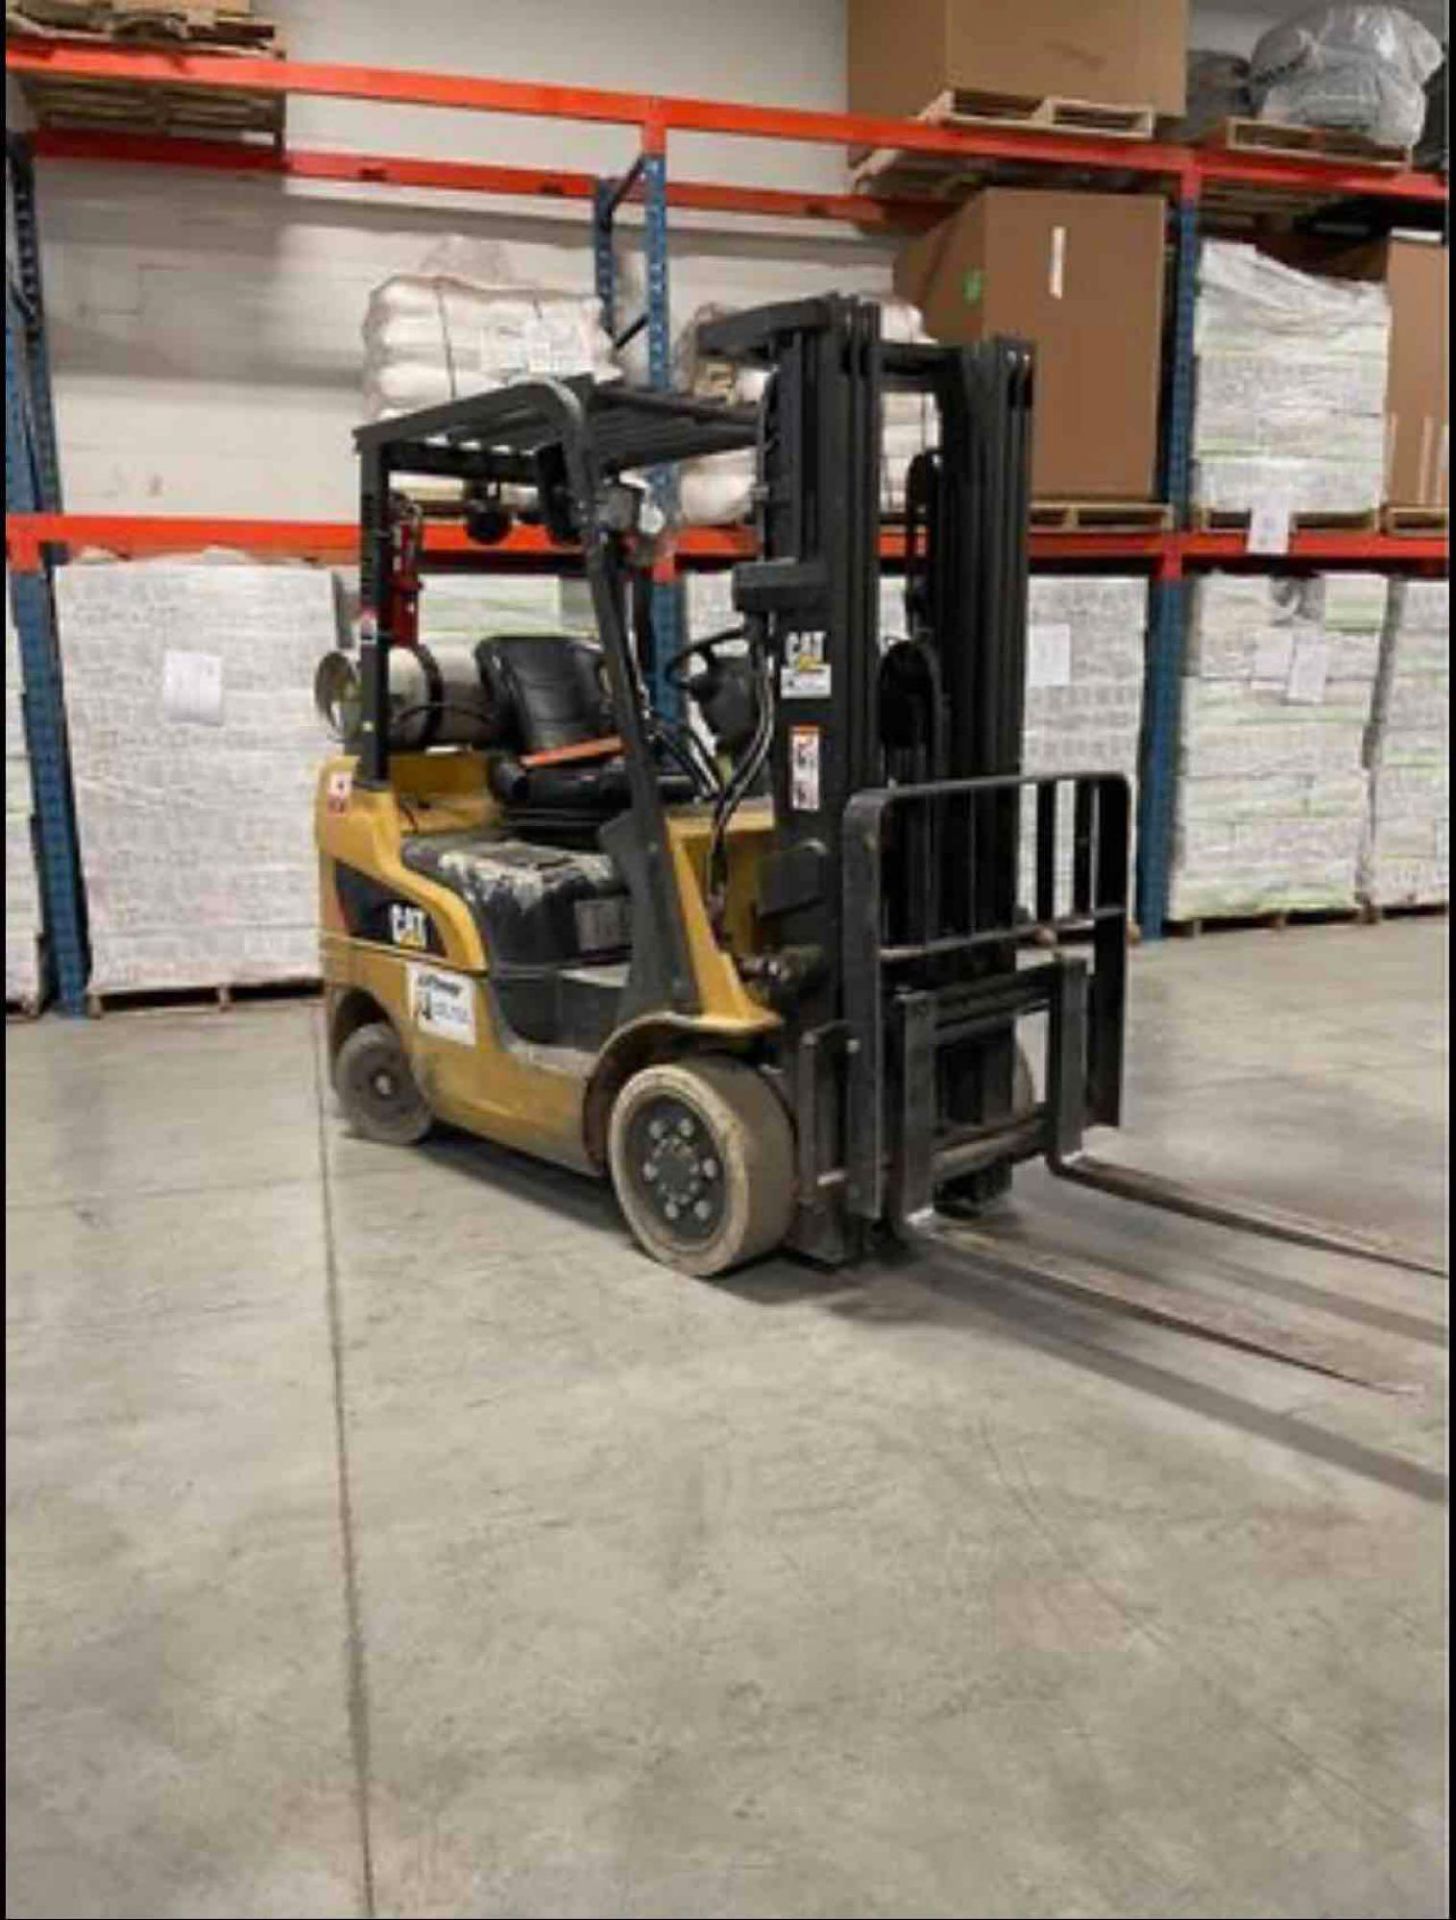 CAT 5000 LBS Forklift M/N C5000